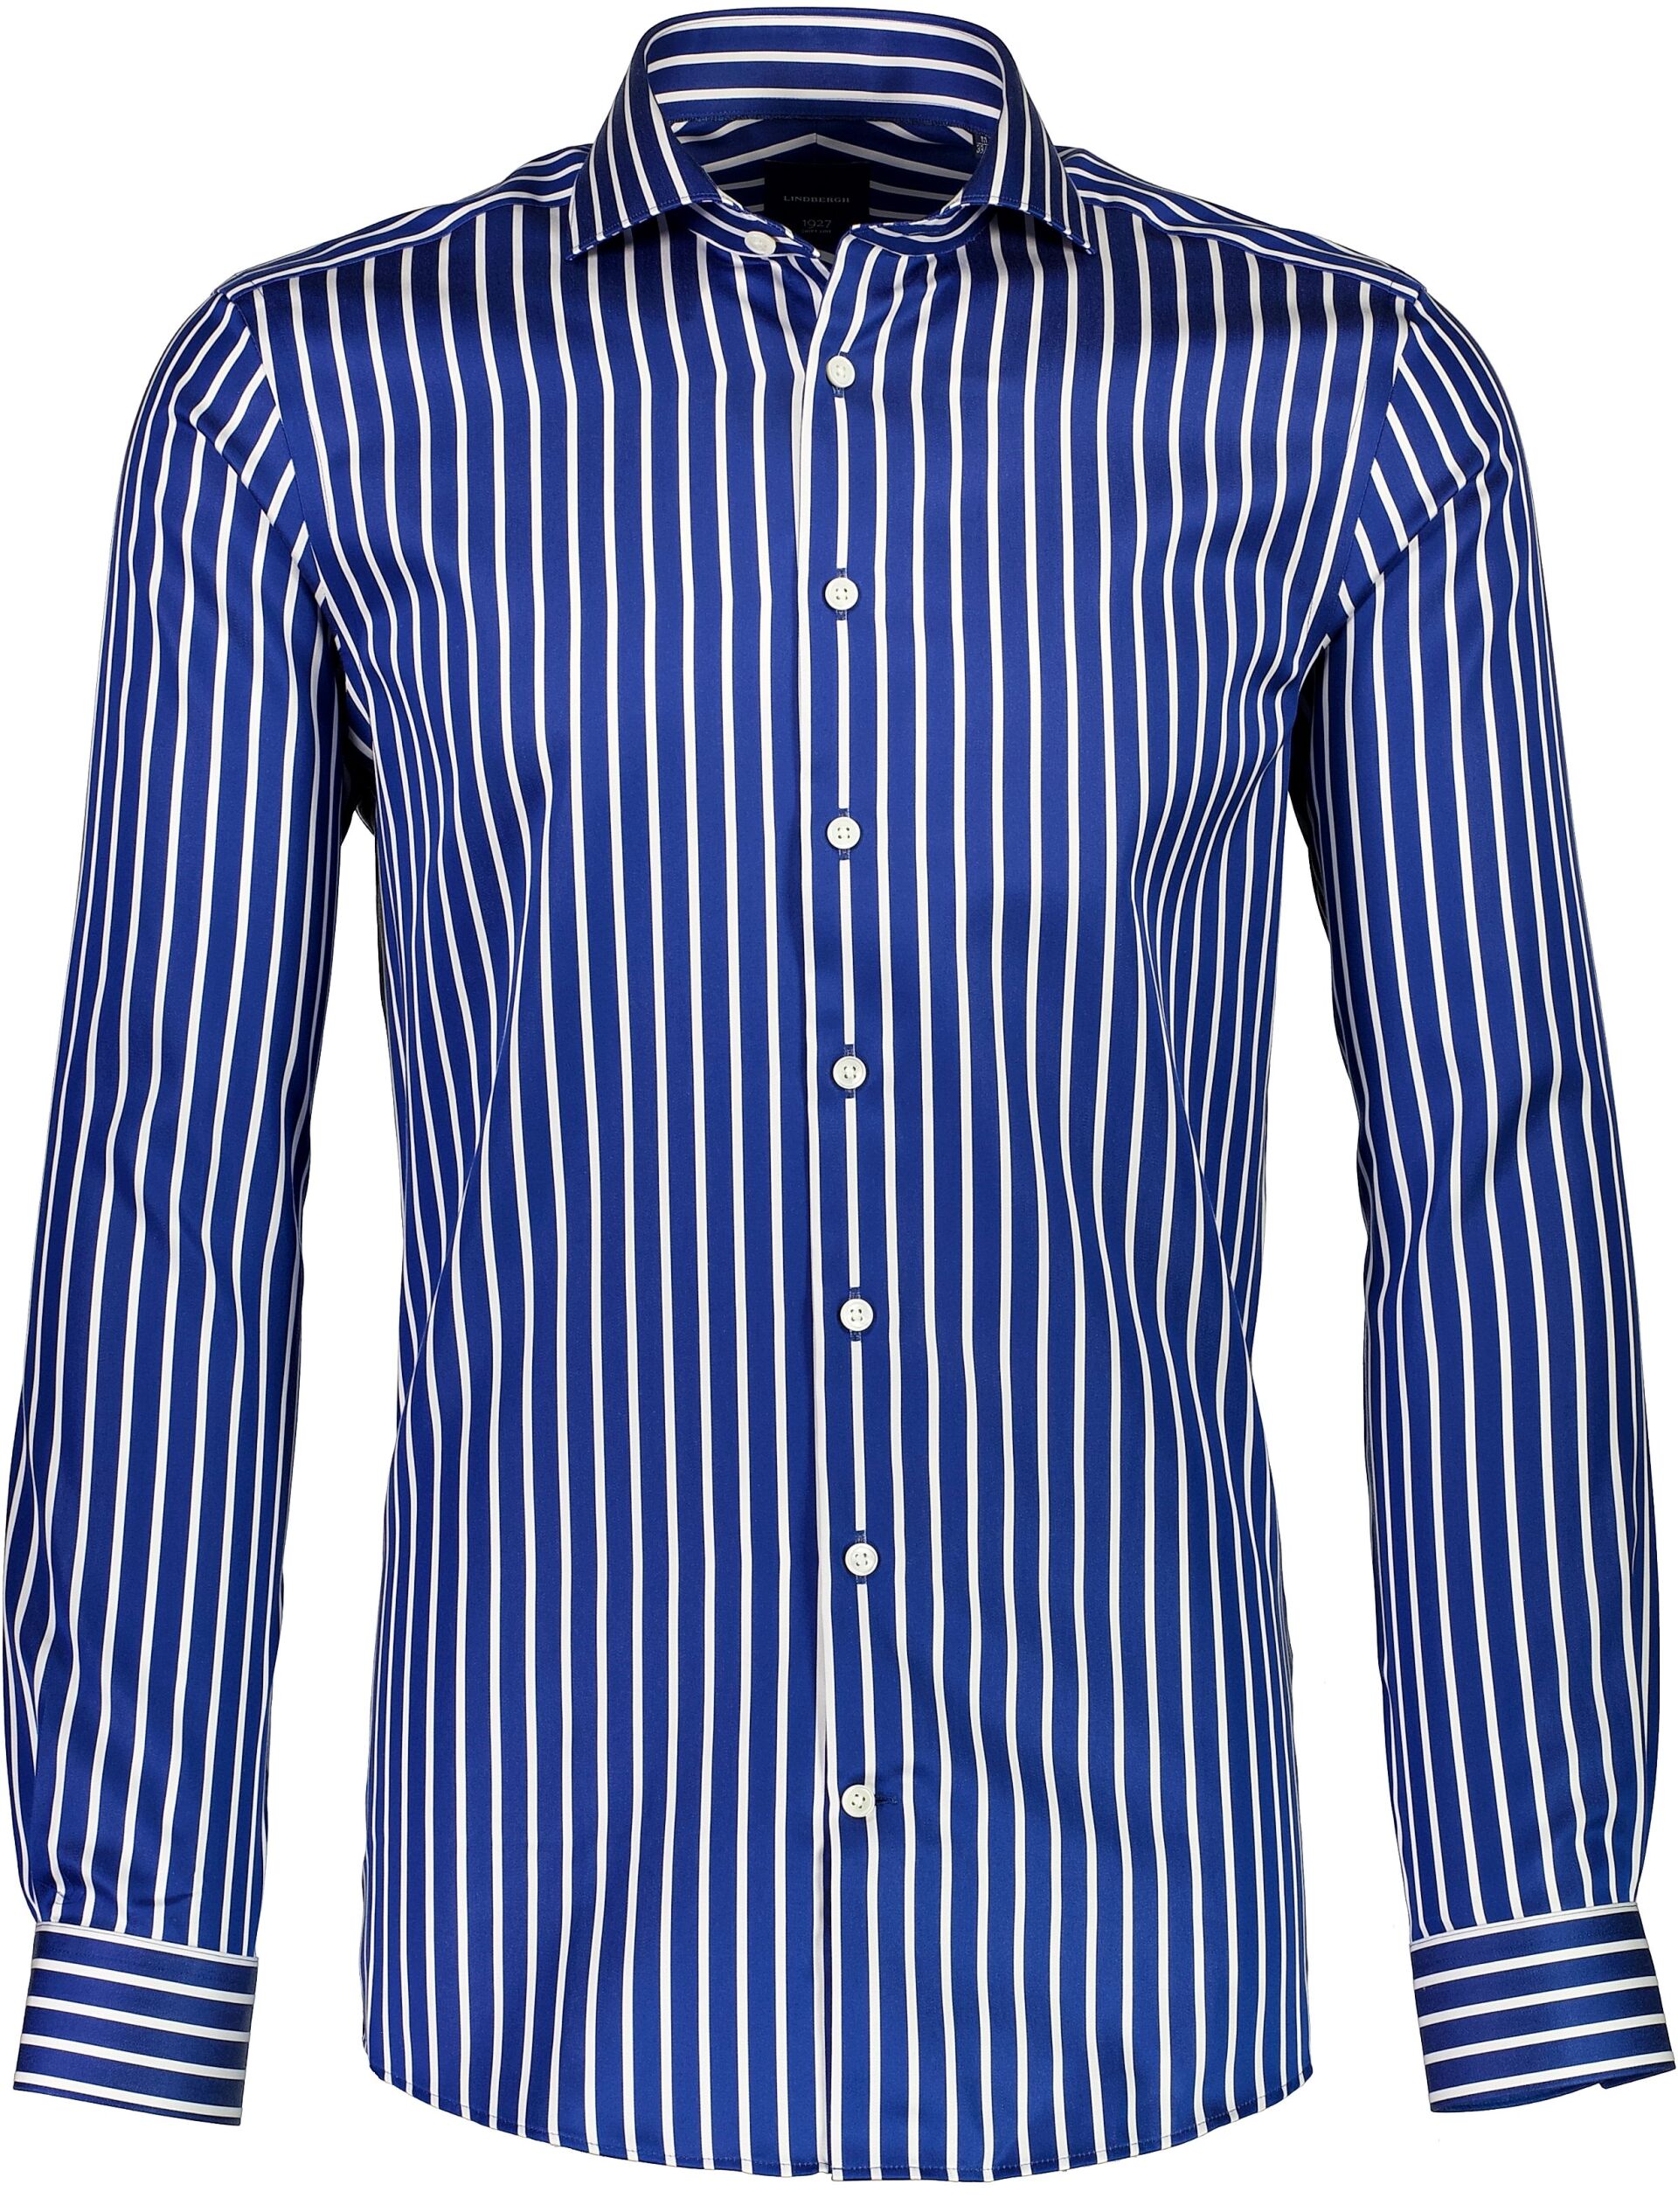 1927 Business casual shirt 30-247106